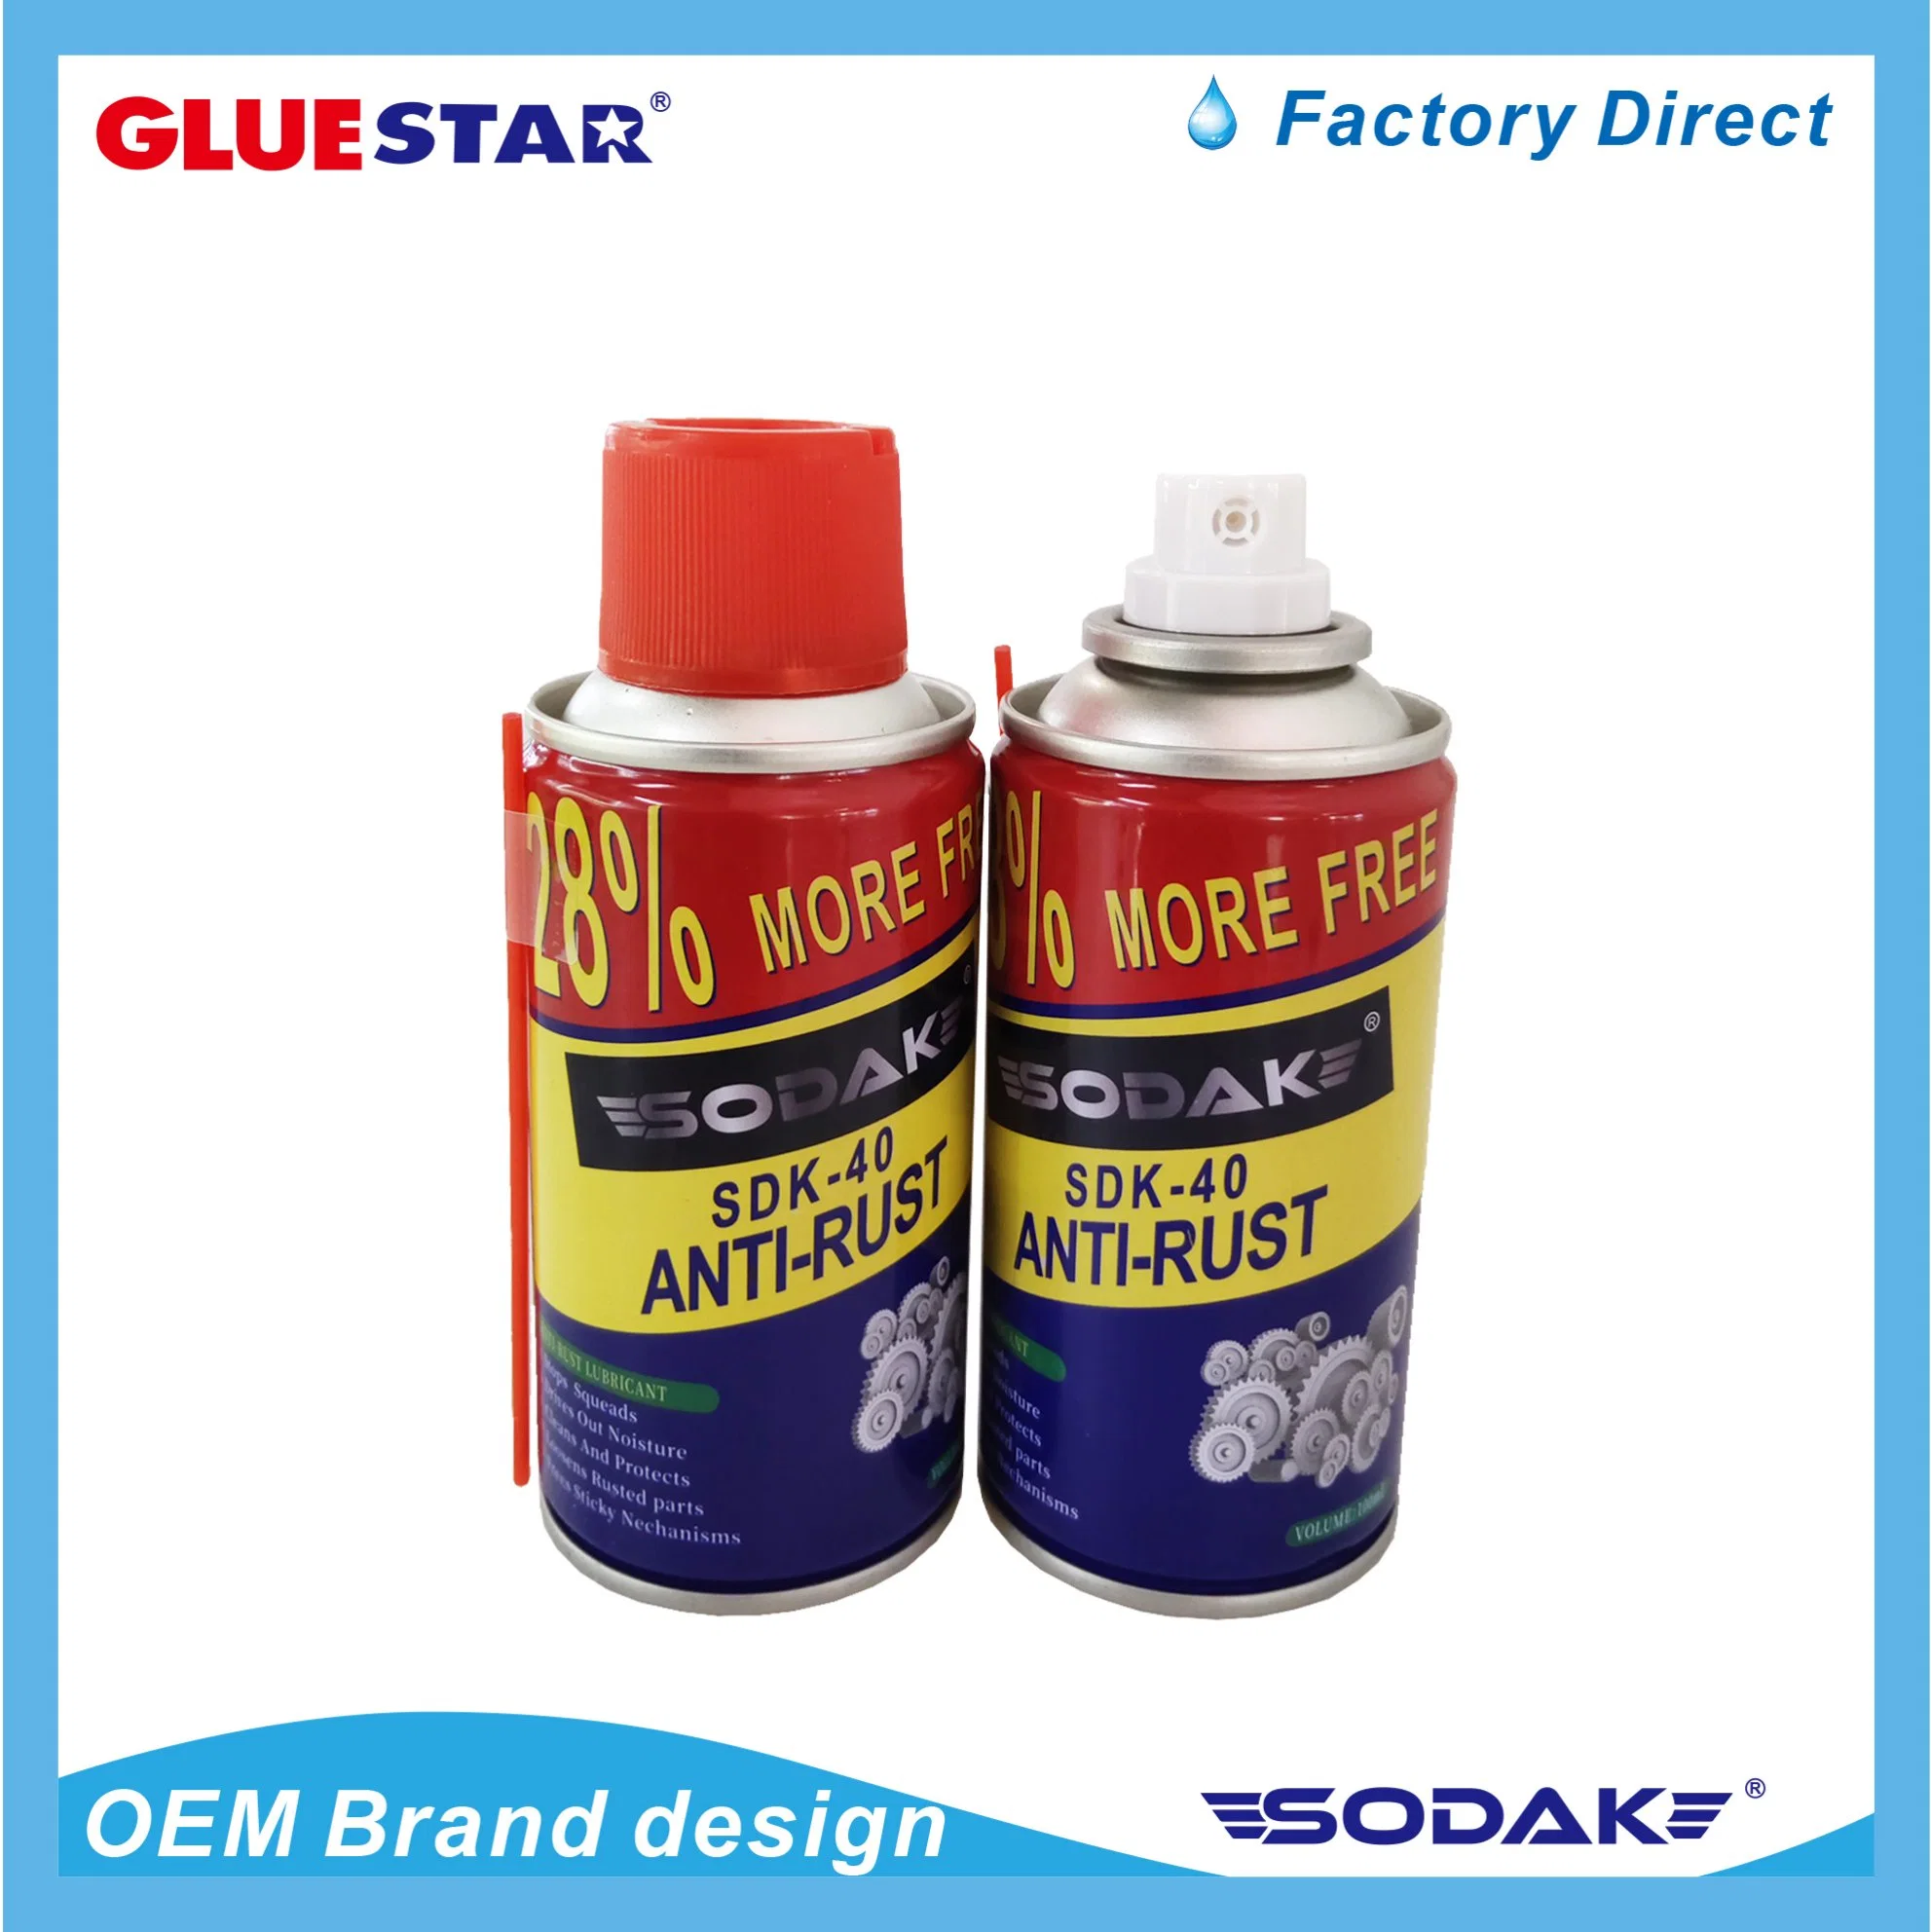 Sodak Chemical Anti-Rust Remover Spray Lubricant Silicone Lubricant Spray